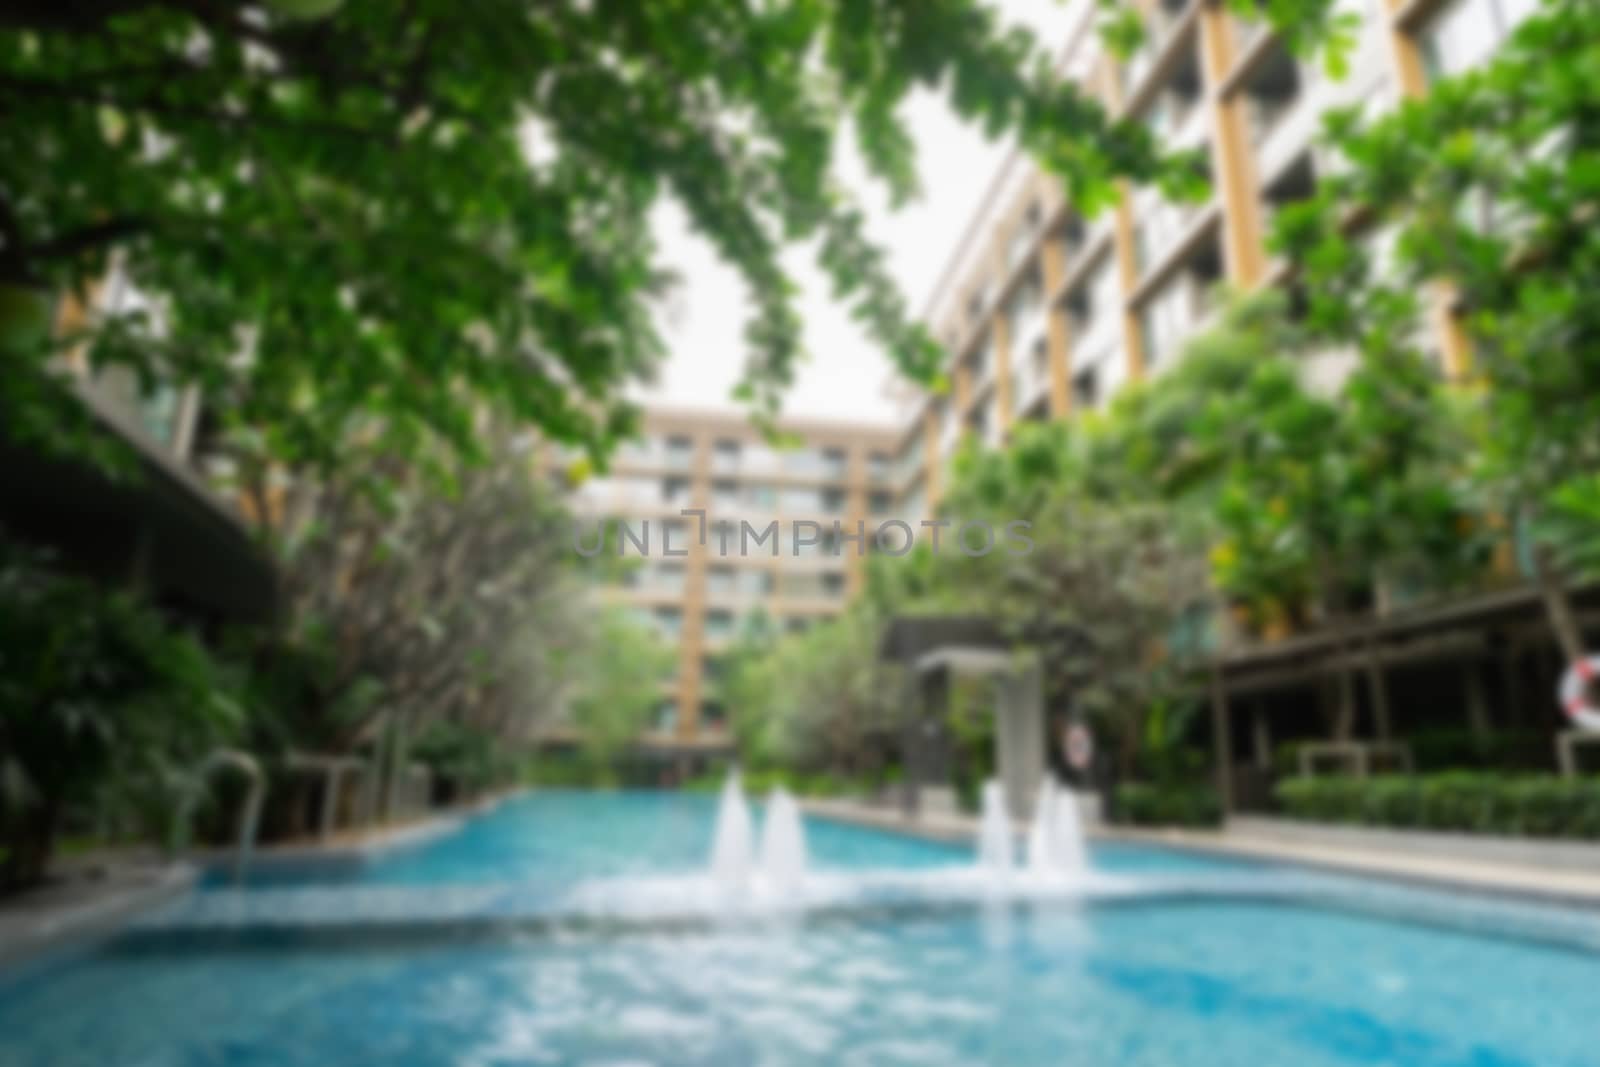 Swimming pool at the luxury resort morning scene, blurred.